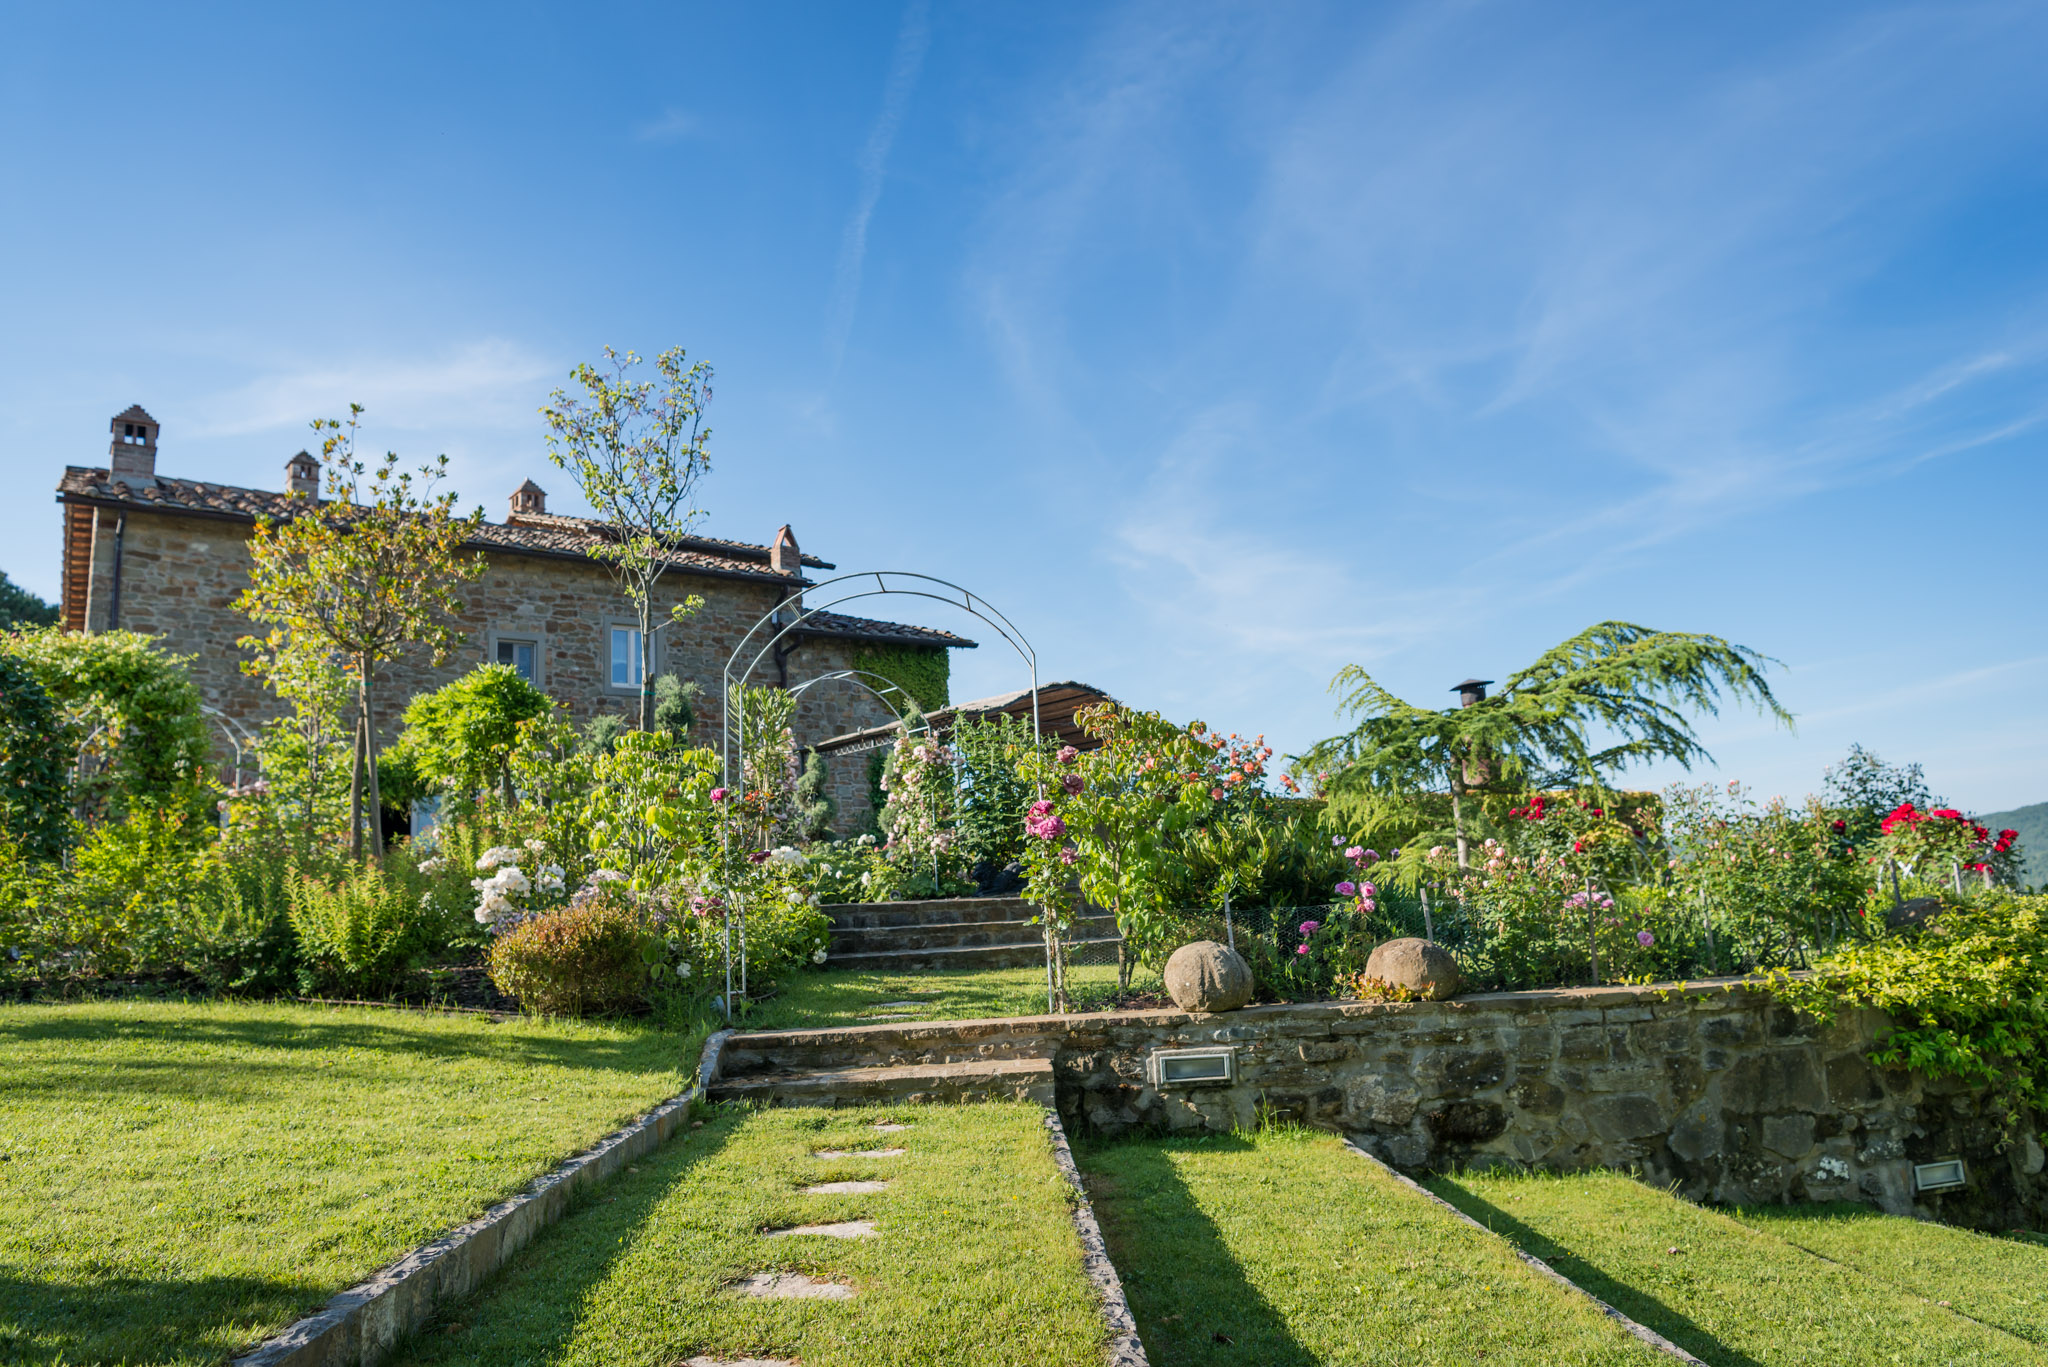 The Montemaggio garden on our estate in Chianti hills